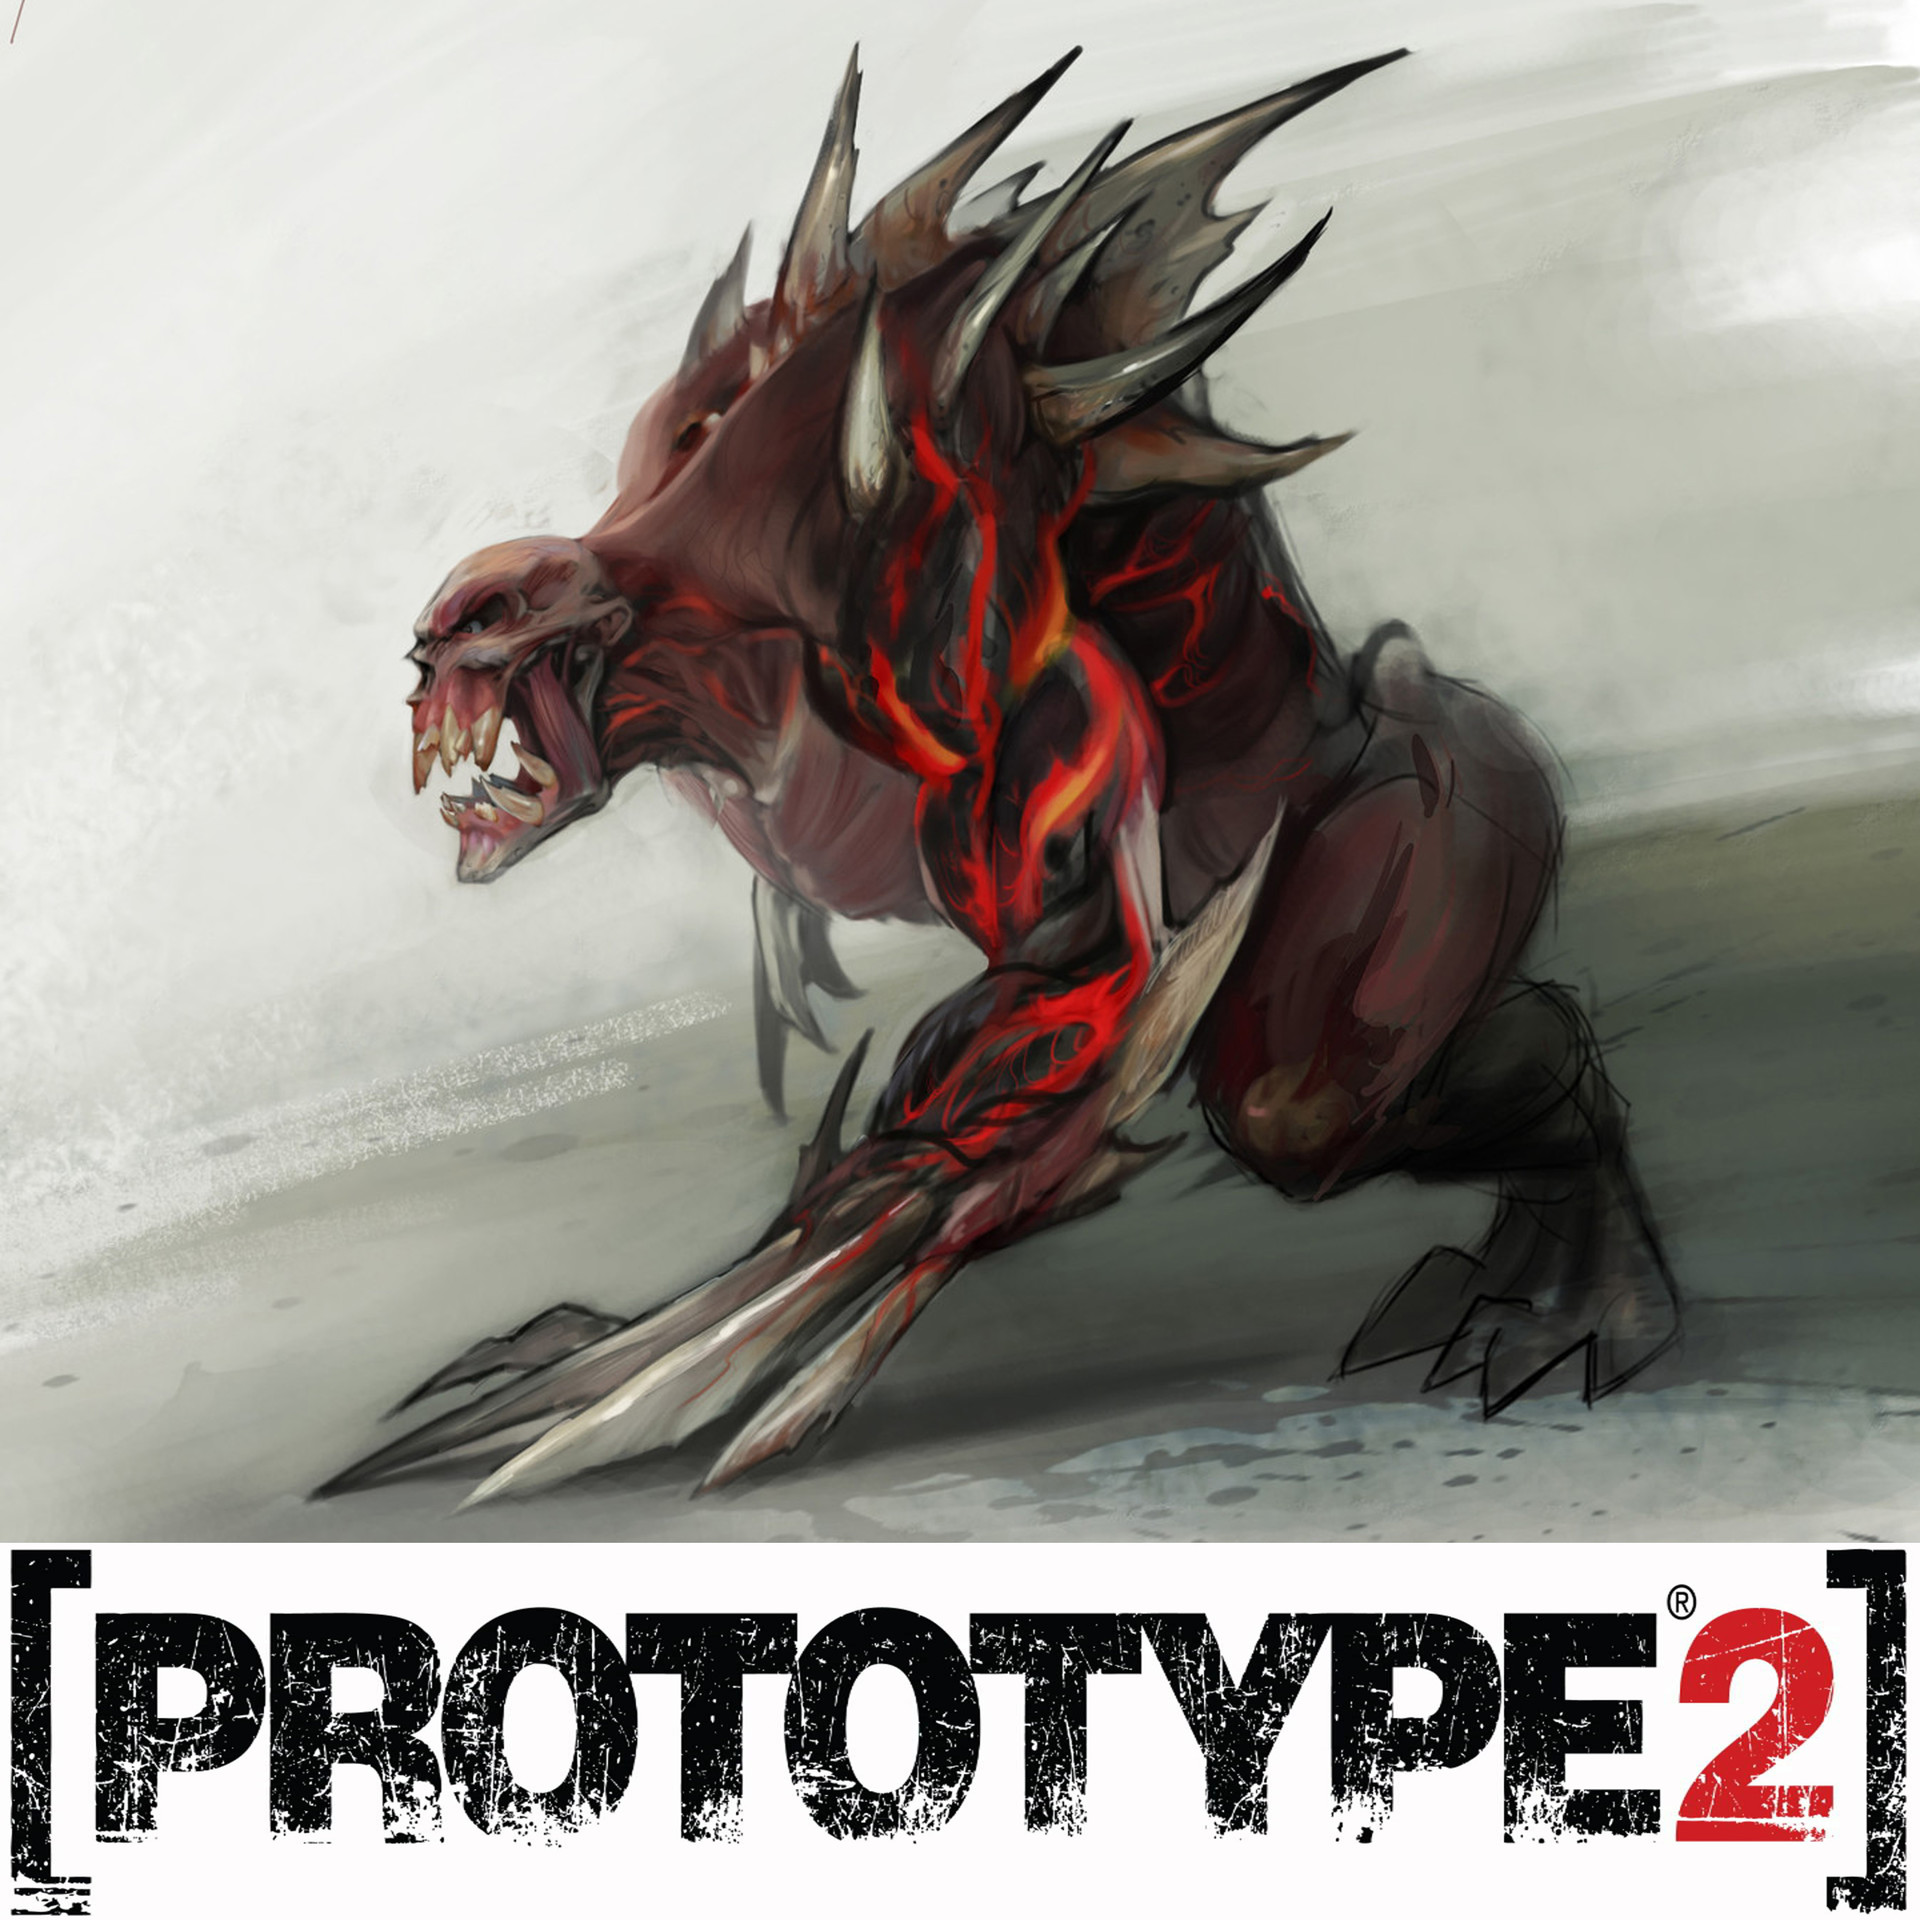 prototype 2 spiked brawler